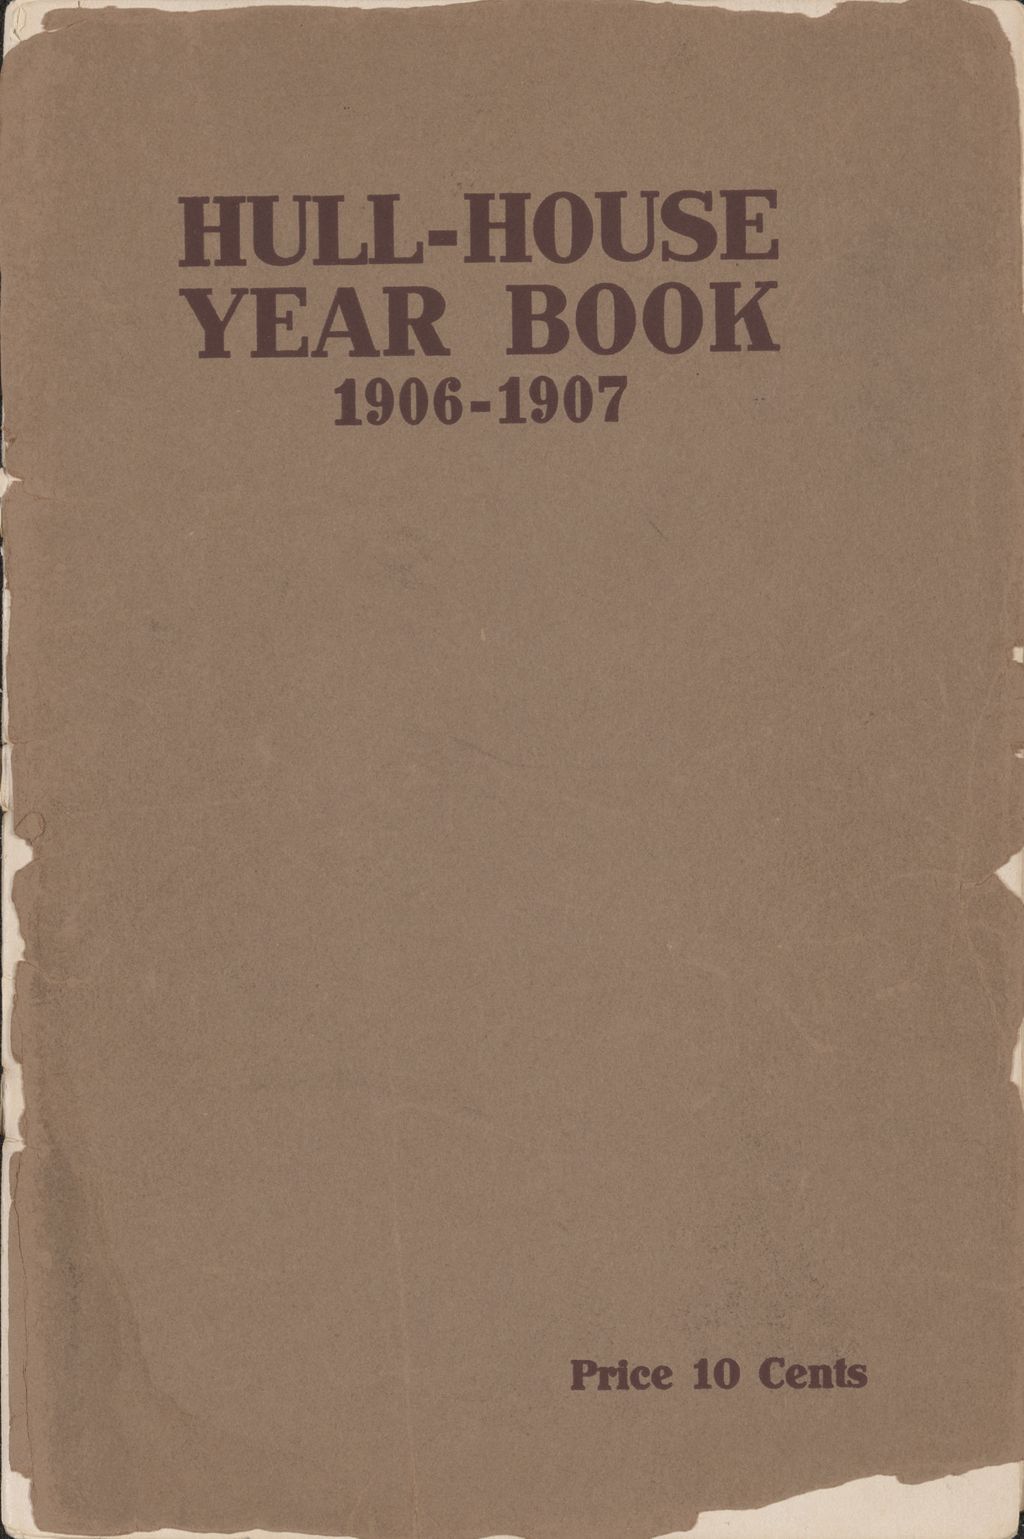 Hull-House Year Book, 1906-1907